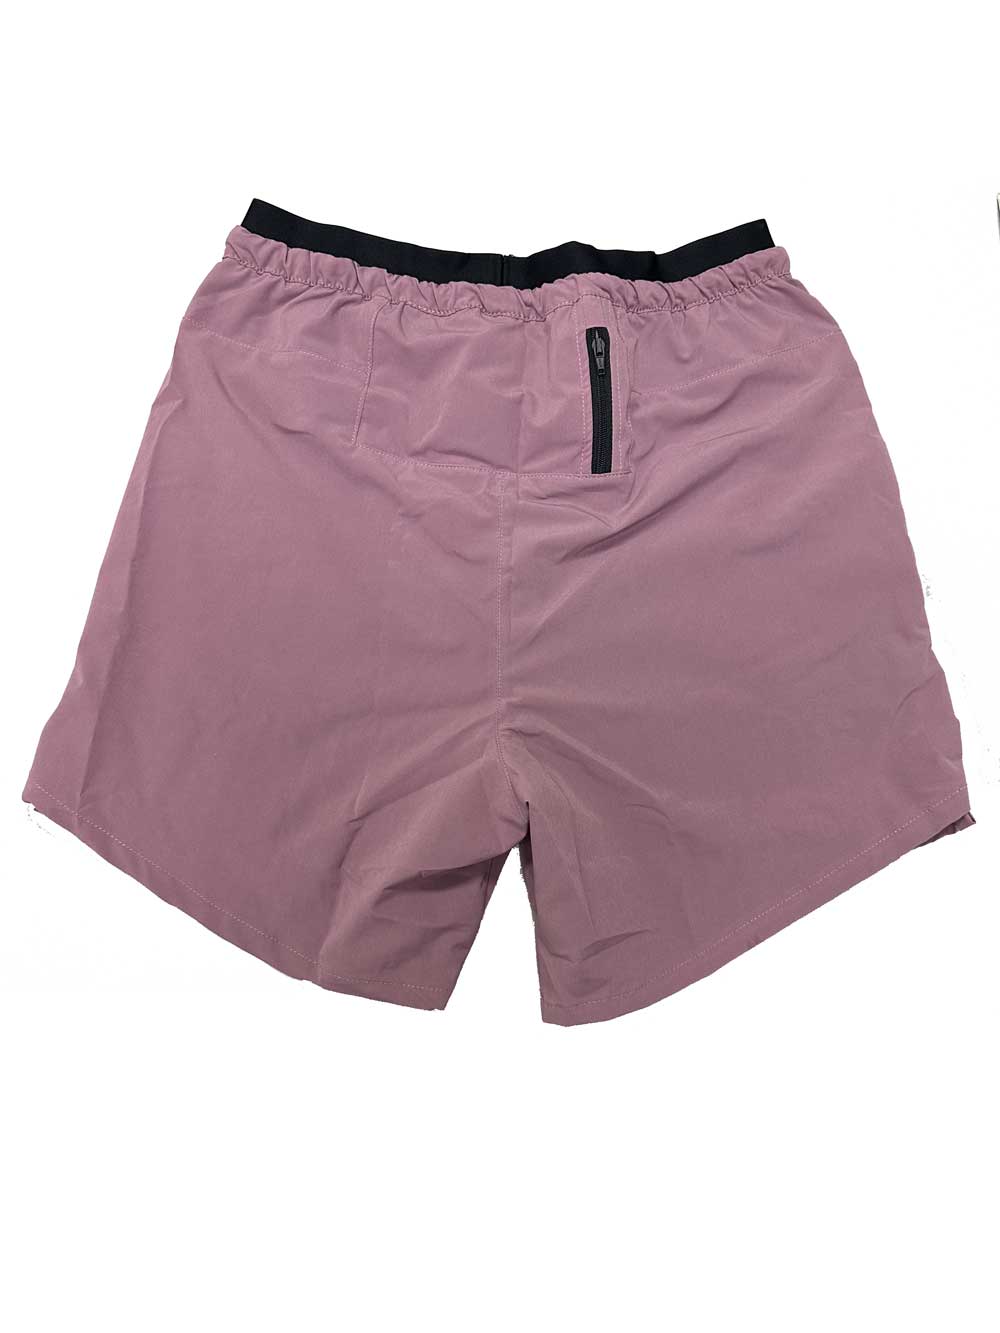 Pantaloneta de running palo de rosa hombre - 111 Cientonce